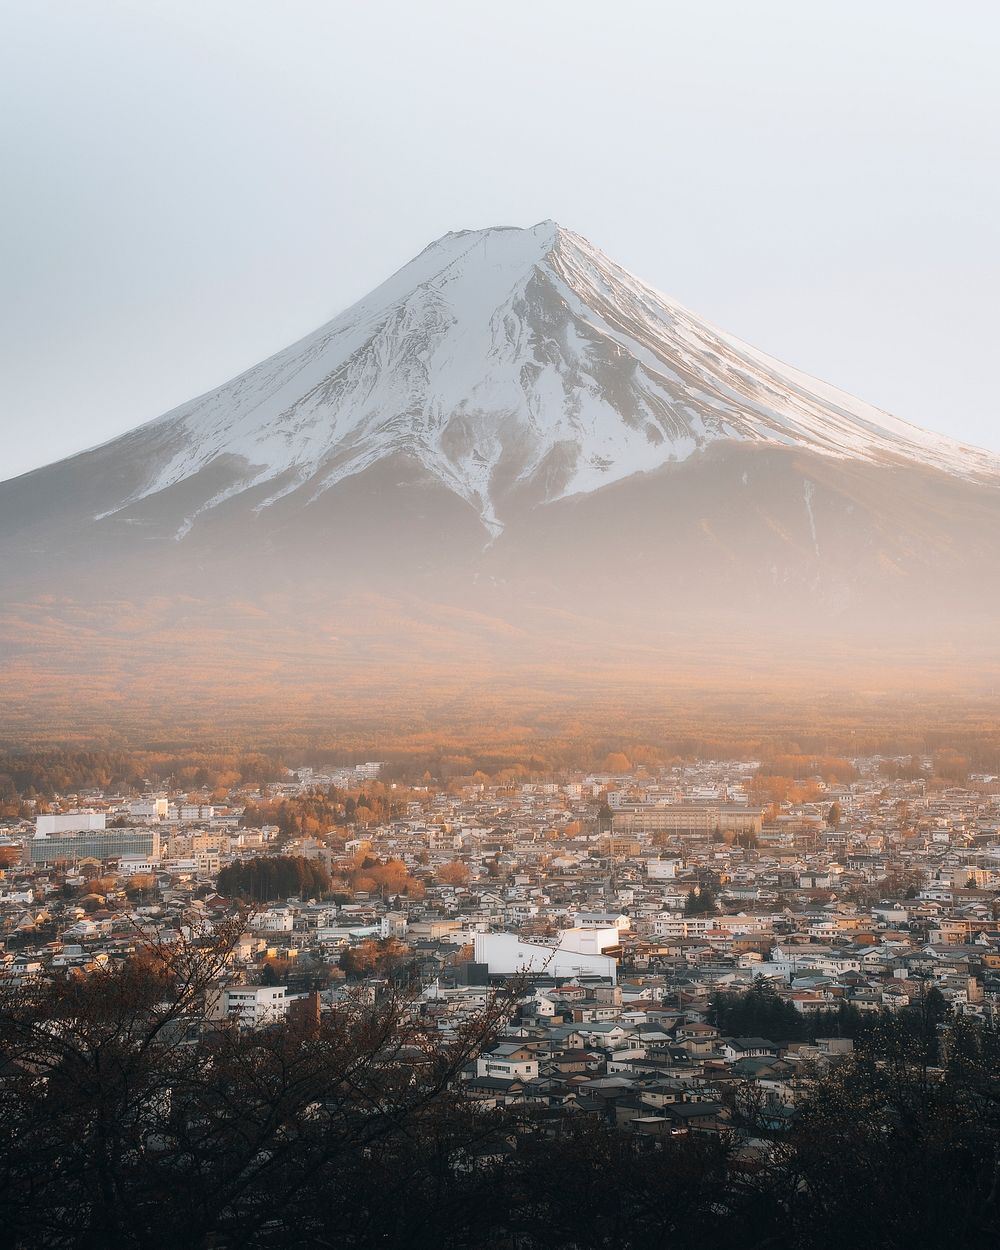 Mount Fuji and Kawaguchiko town in Japan